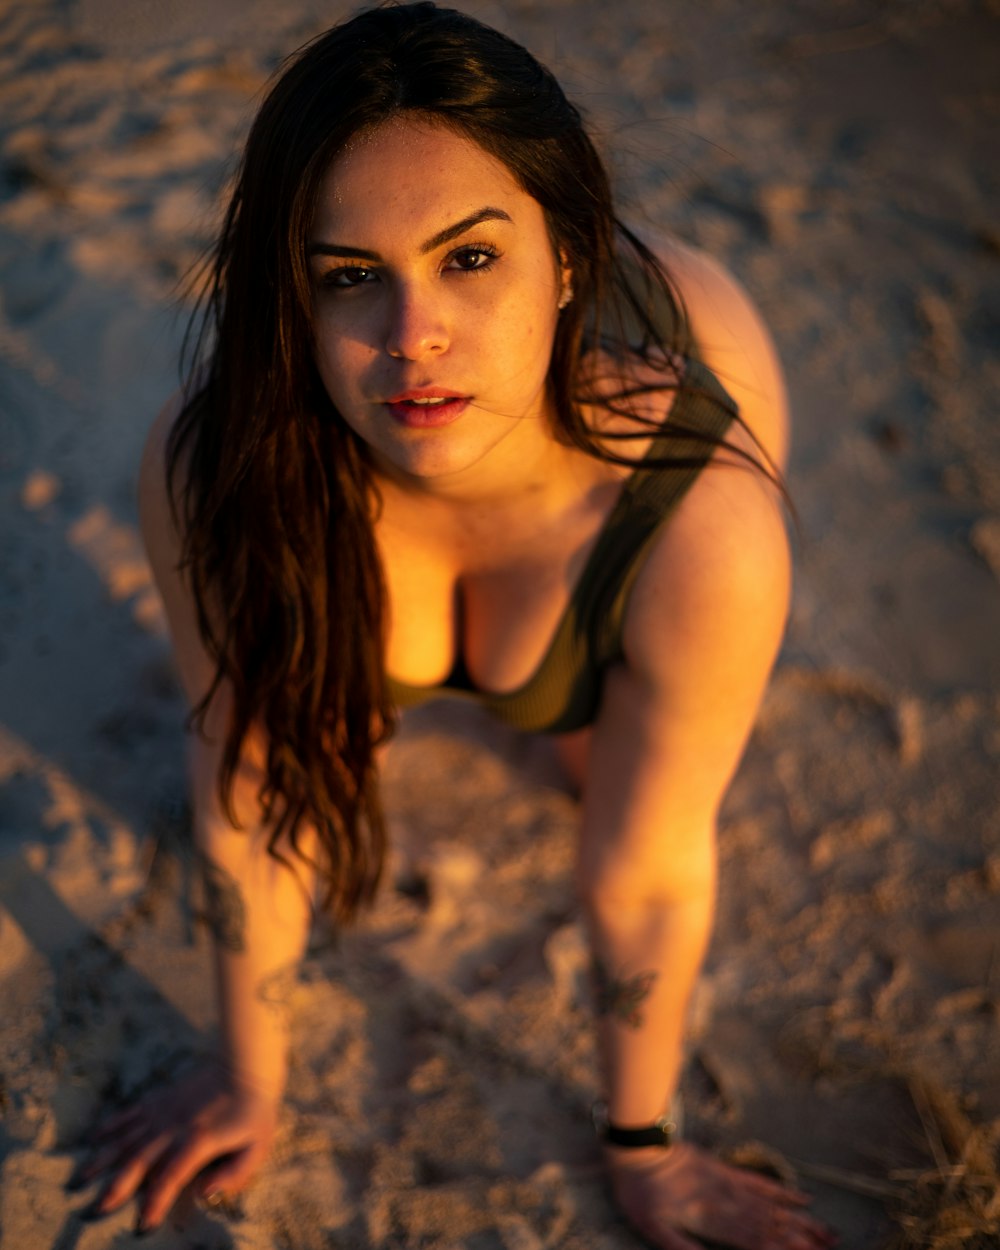 woman wearing tank top on sand